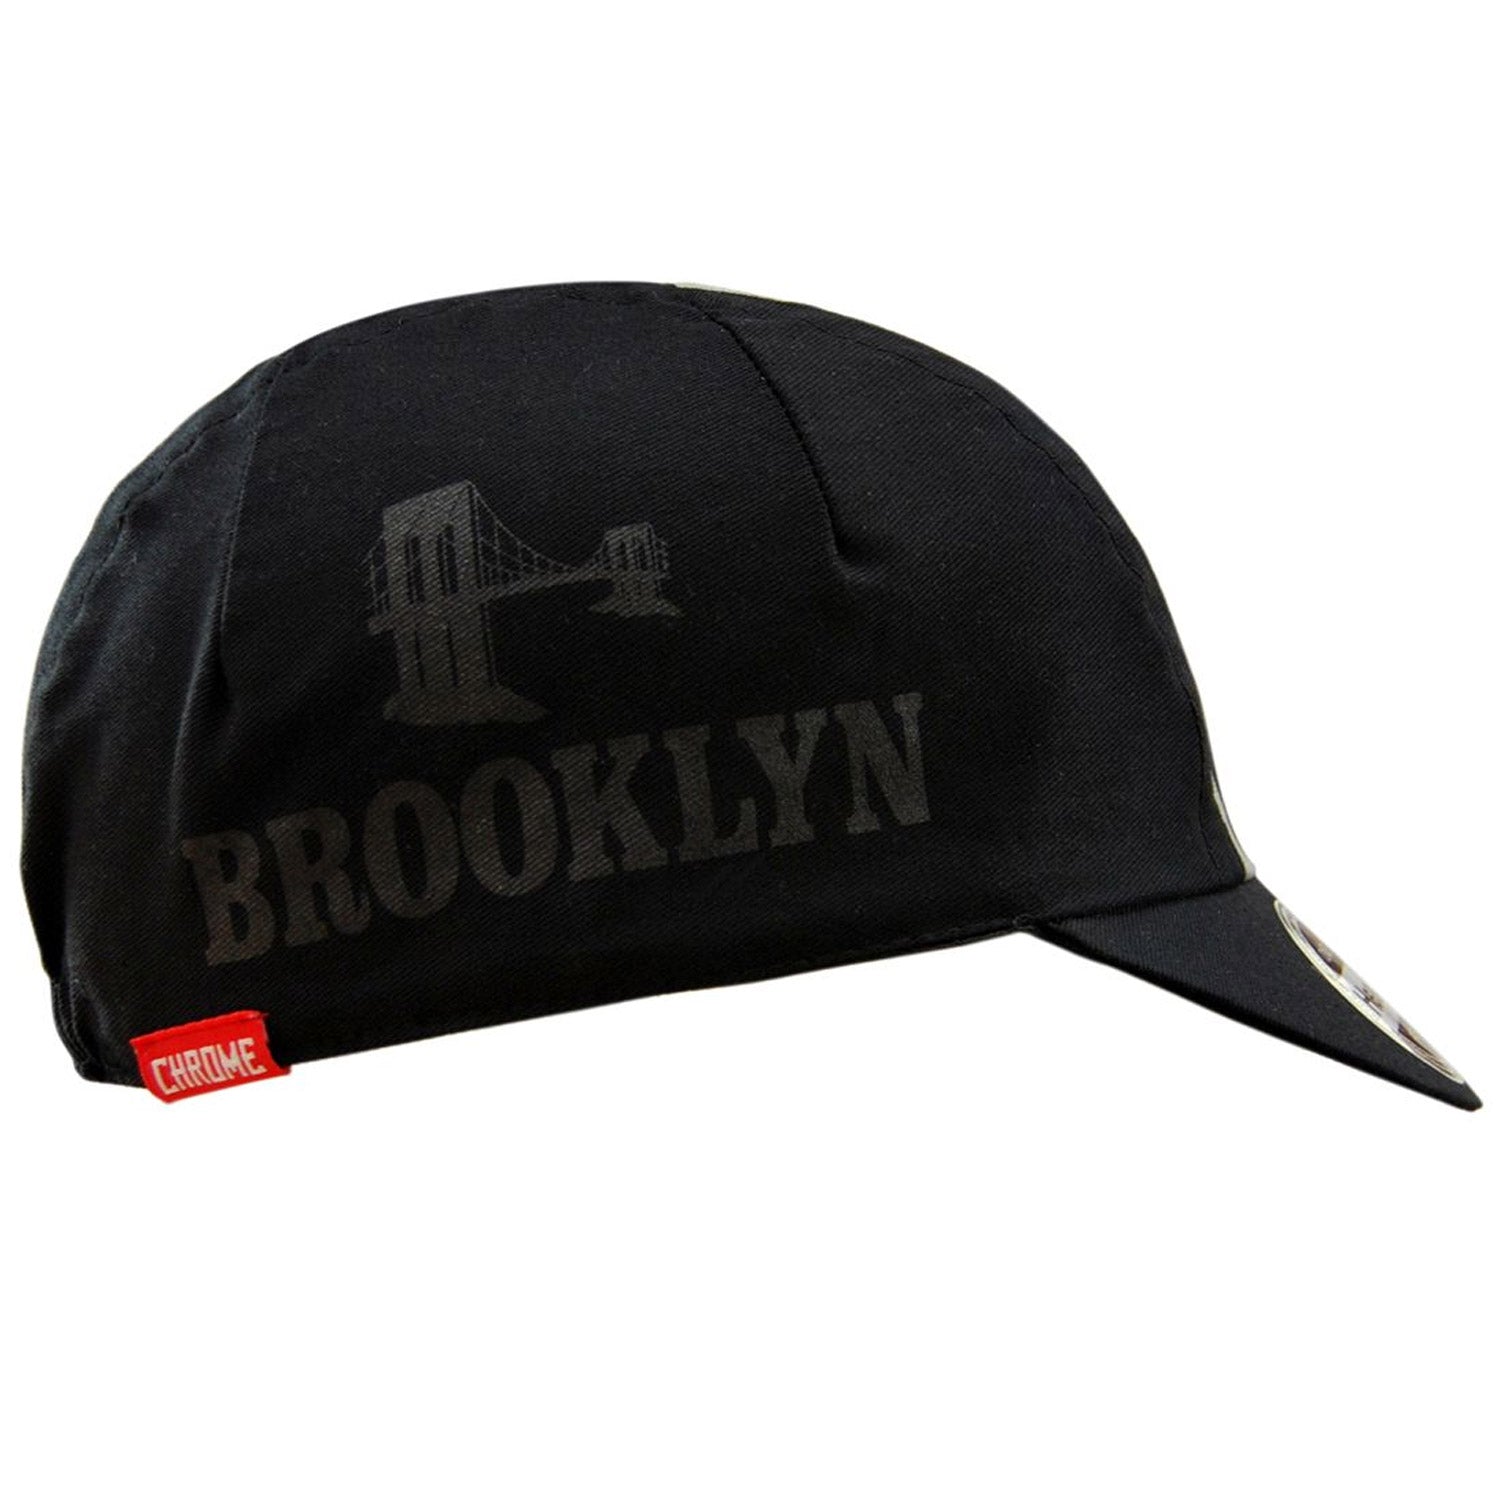 Cappellino Headdy Brooklyn - Chrome